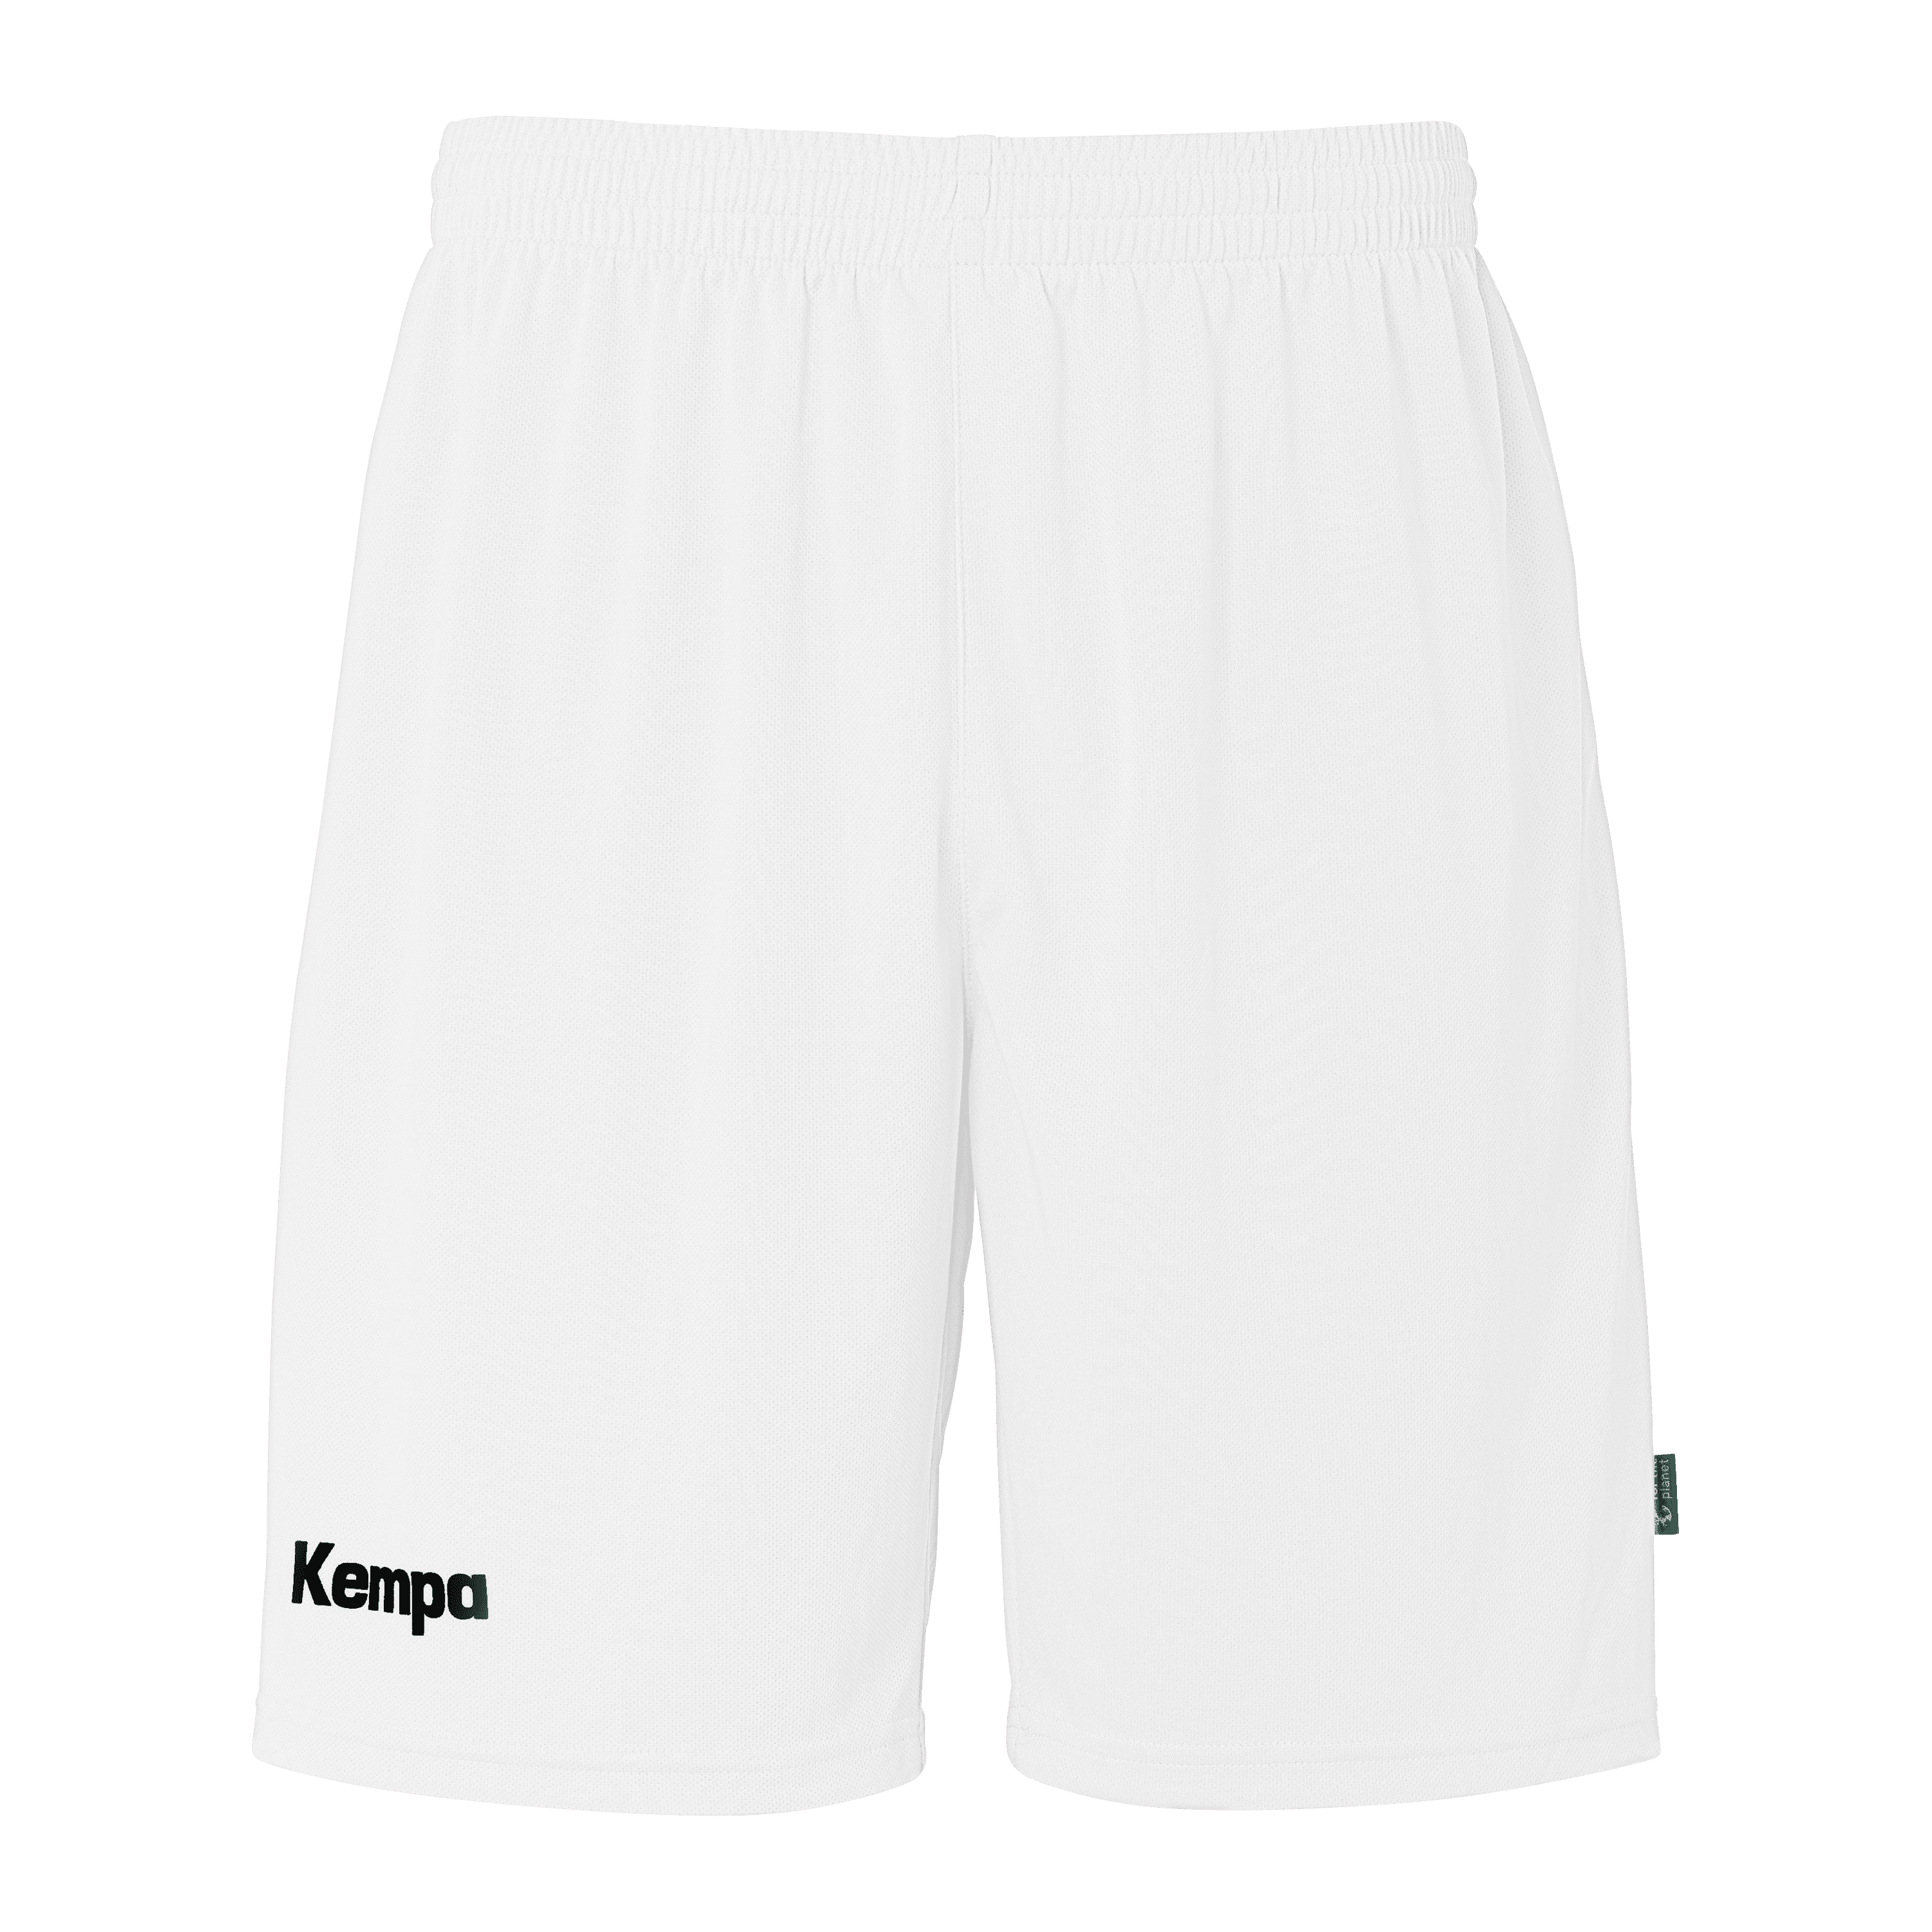 Kempa Team Shorts weiß